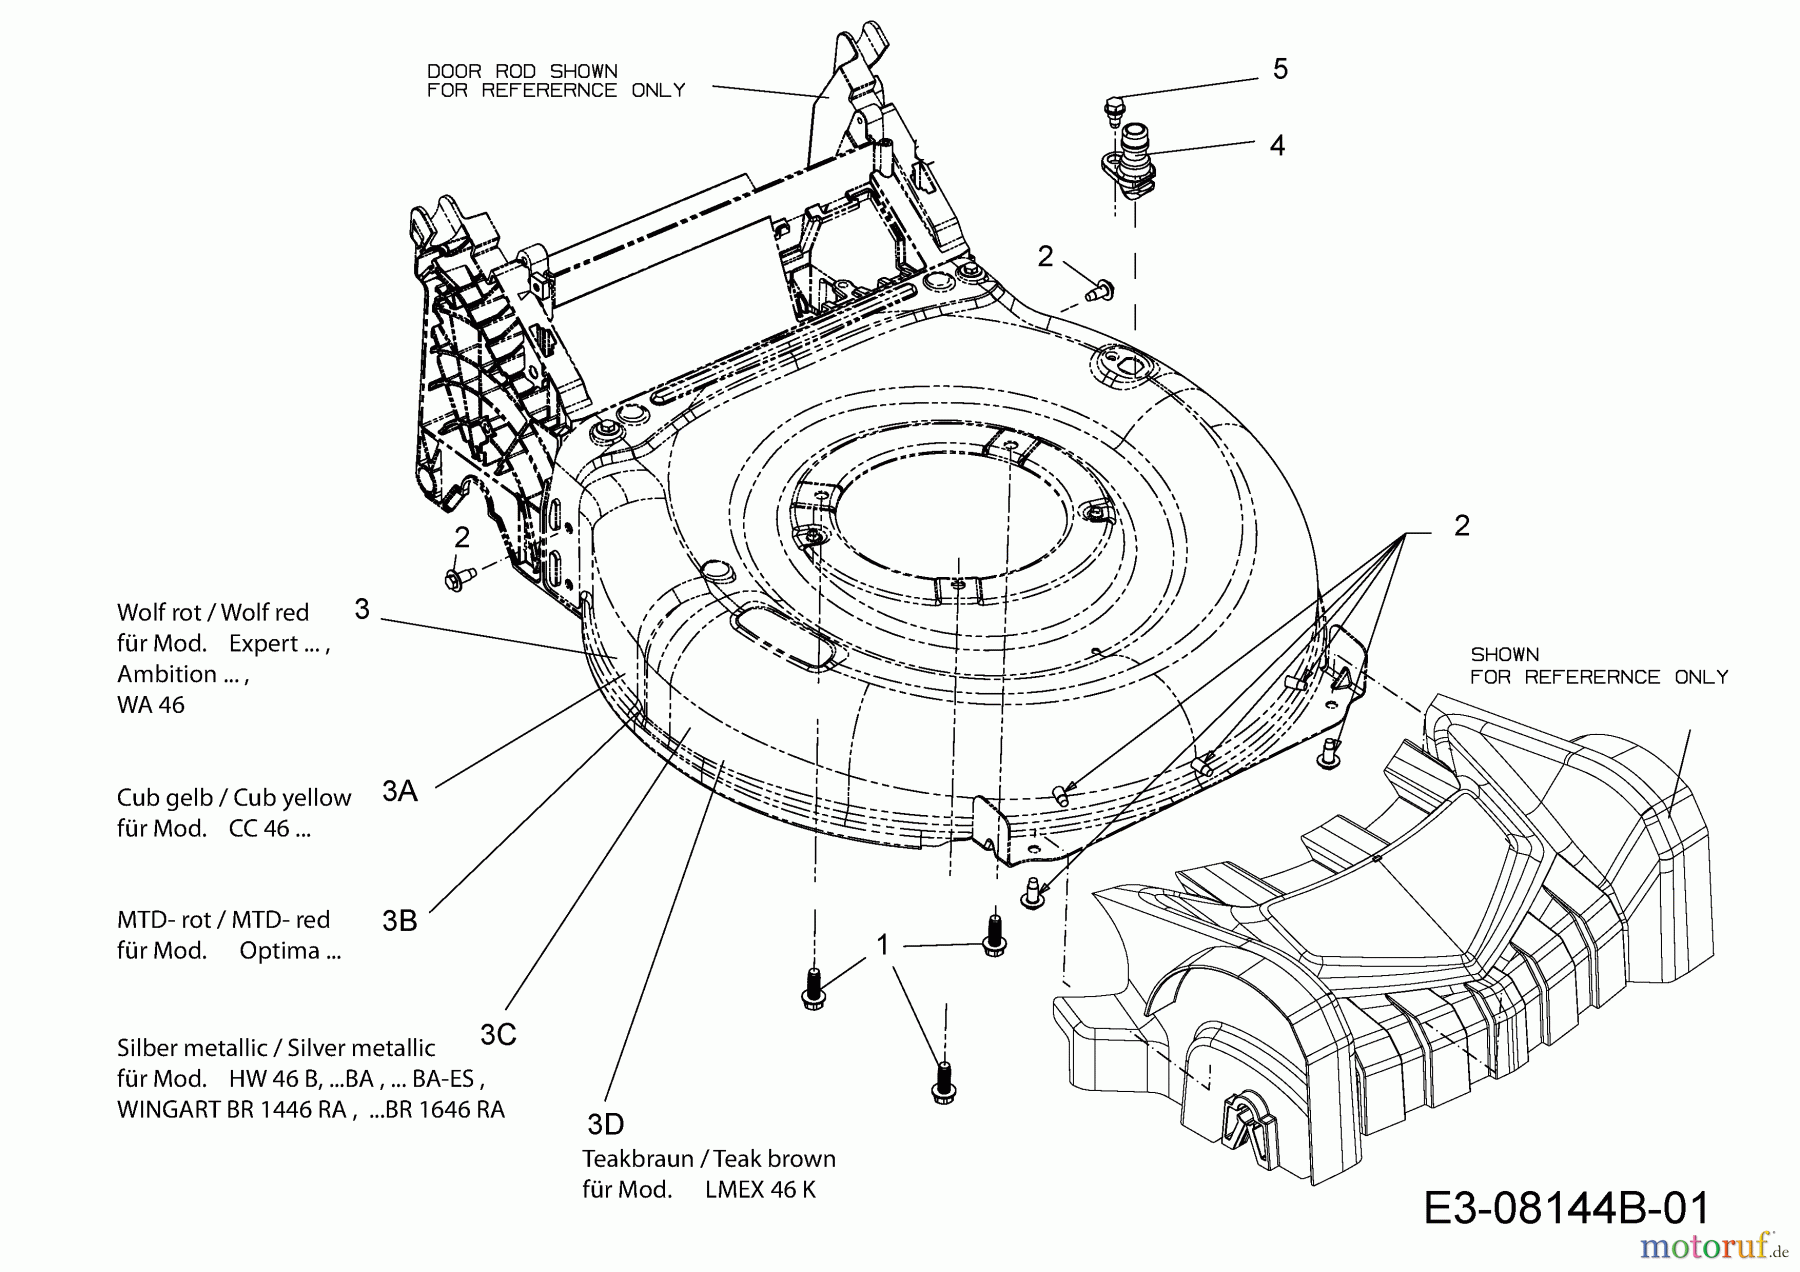  MTD Motormäher mit Antrieb Optima 46 SPB 12A-TG5C600  (2014) Mähwerksgehäuse, Waschdüse